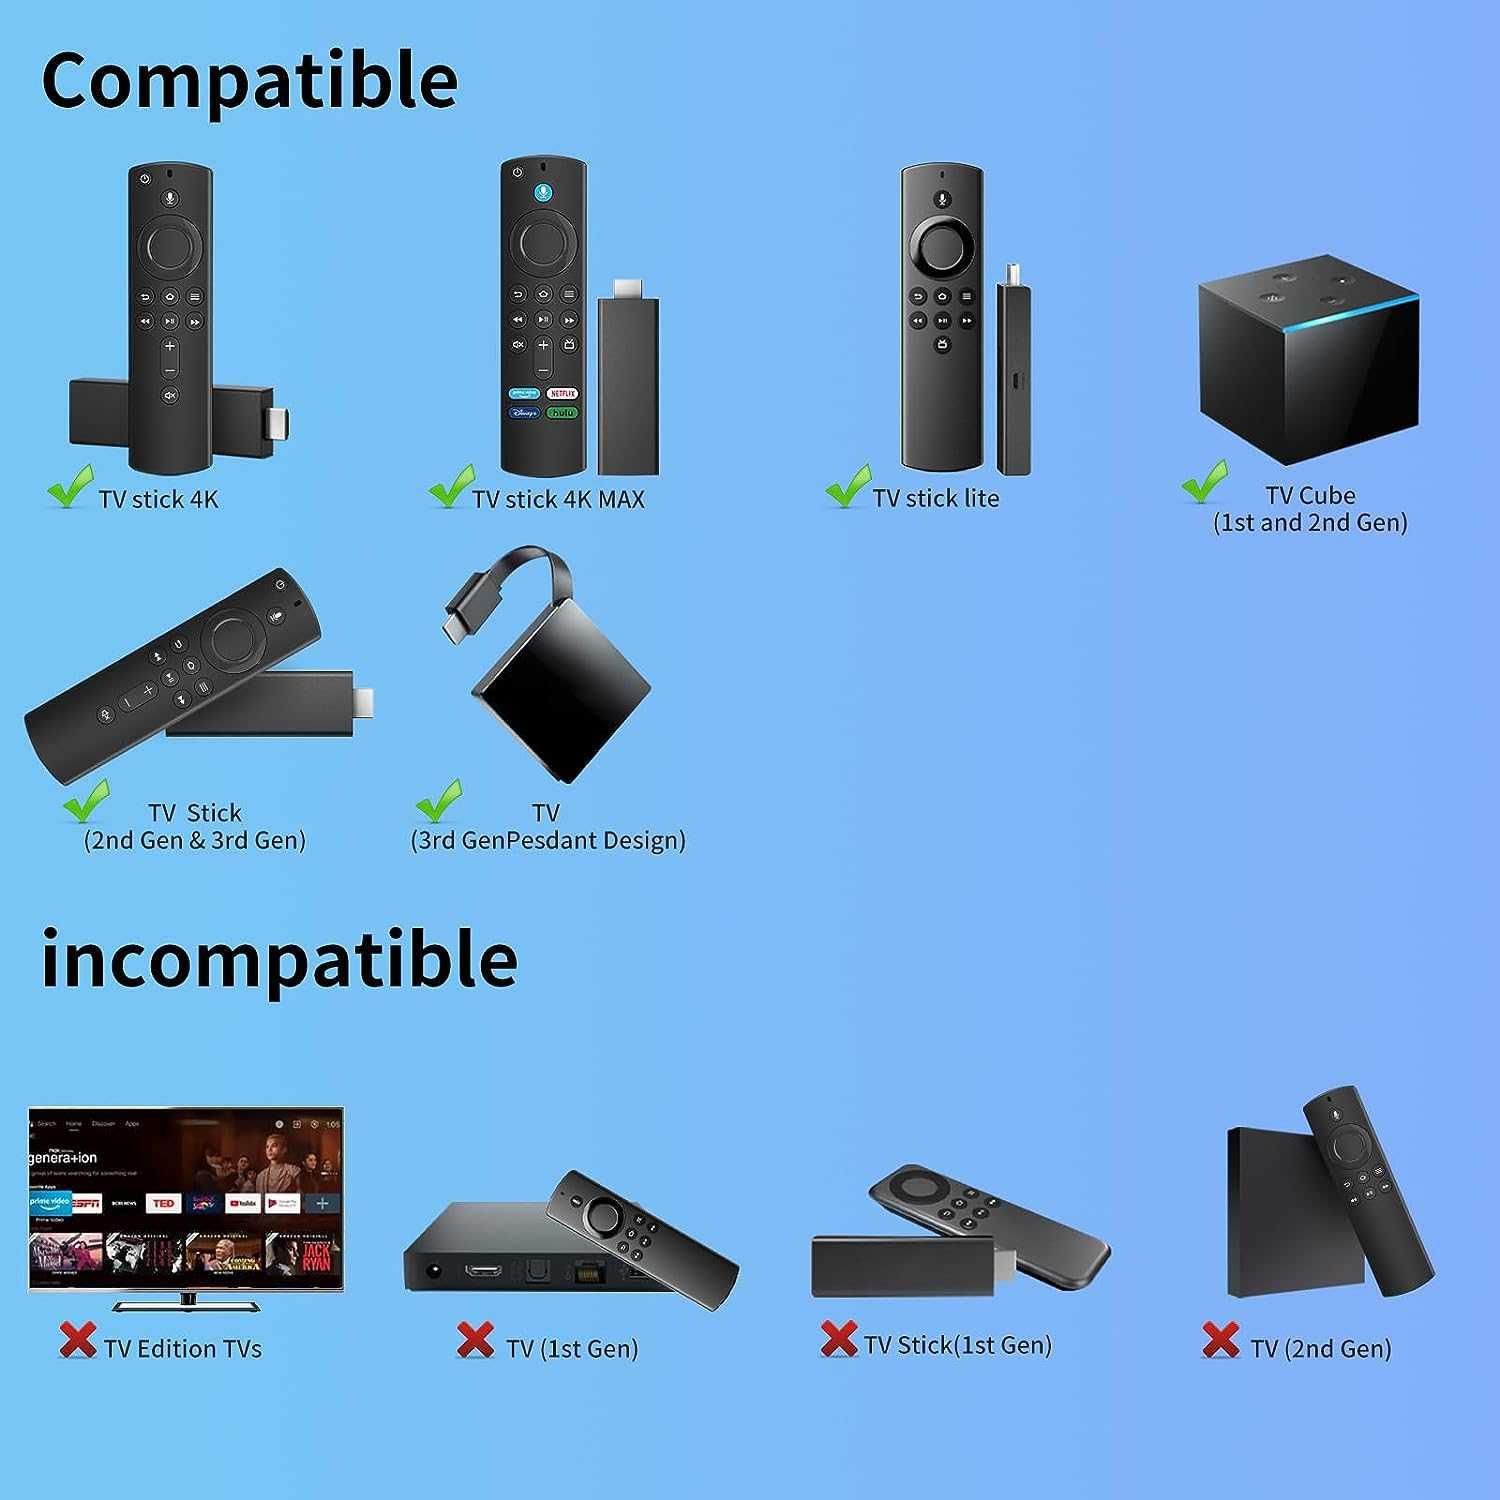 Telecomandă pt Fire TV Stick 4K Max gen3. Comanda vocala. Alexa&Google